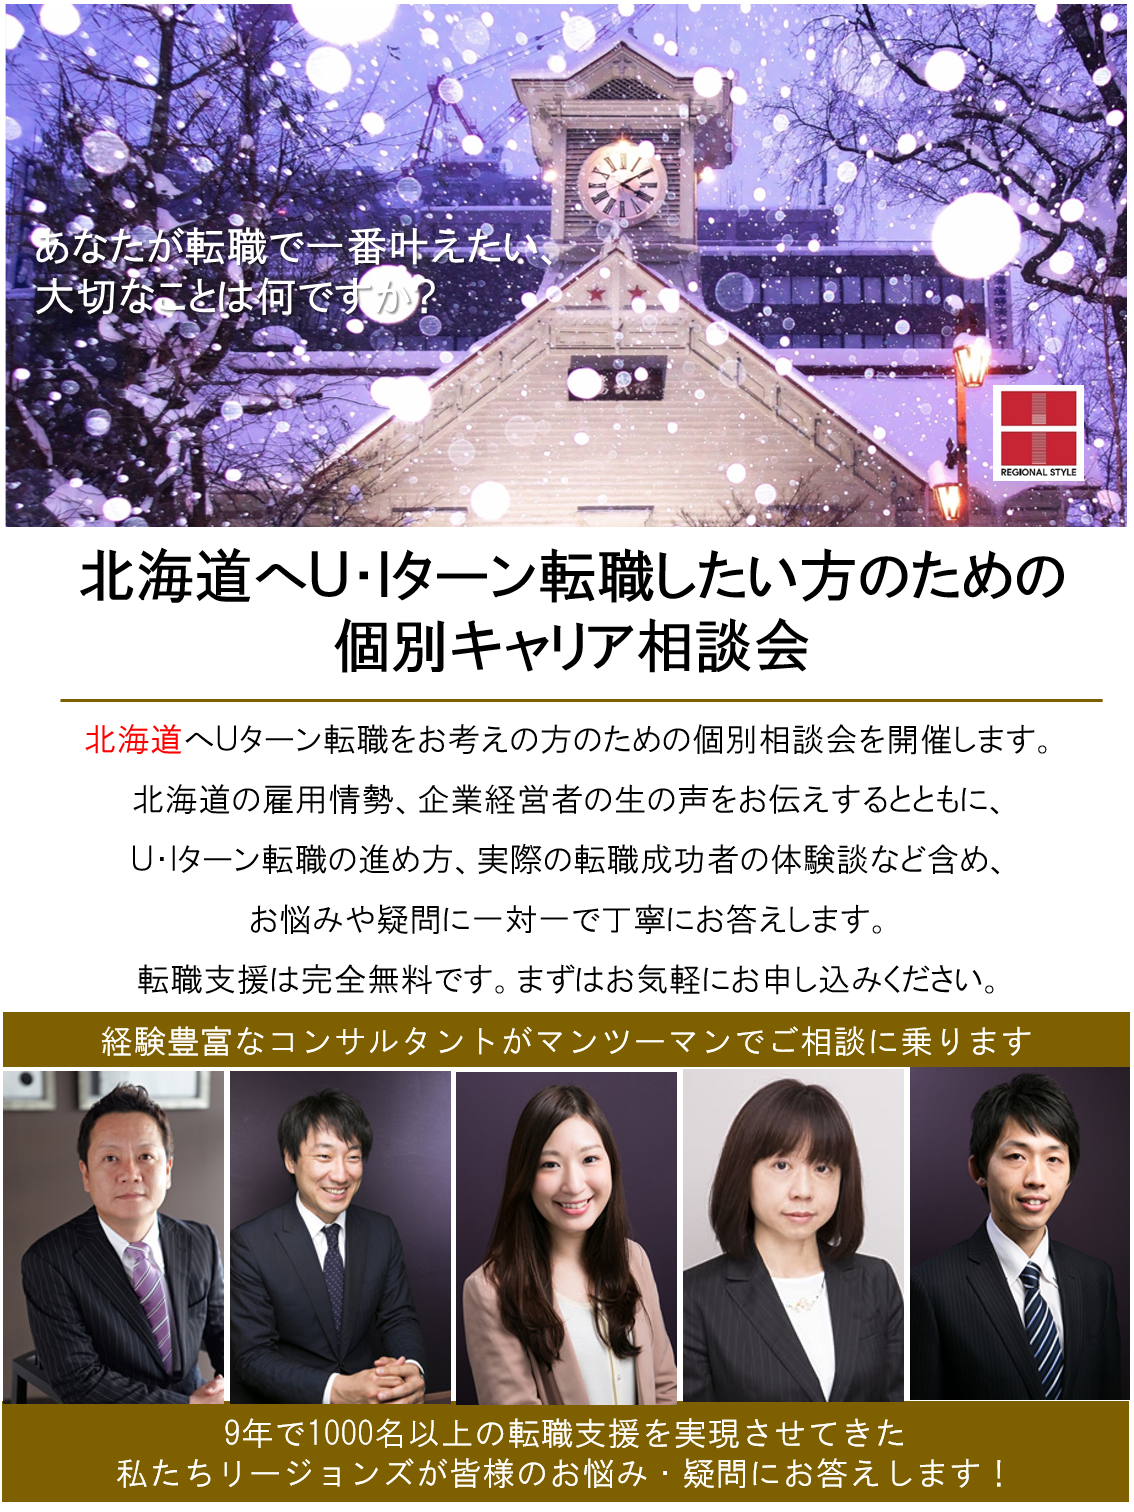 http://www.regional.co.jp/career_mt/020204.png